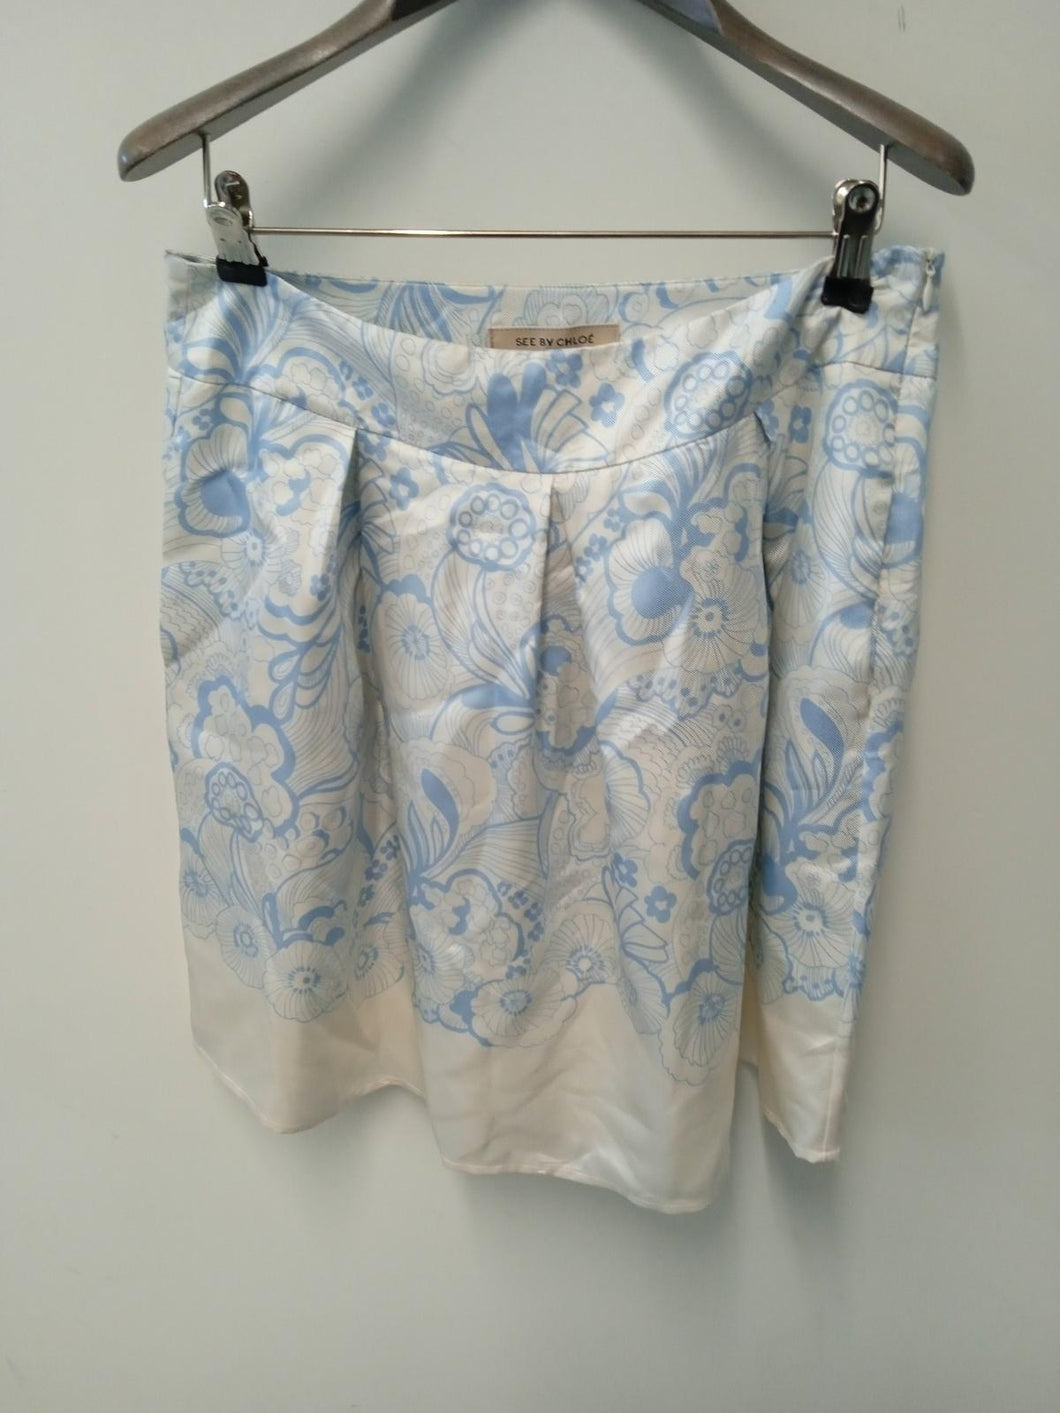 SEEBYCHLOE Ladies White Blue Floral Print Mini Skirt Size UK8